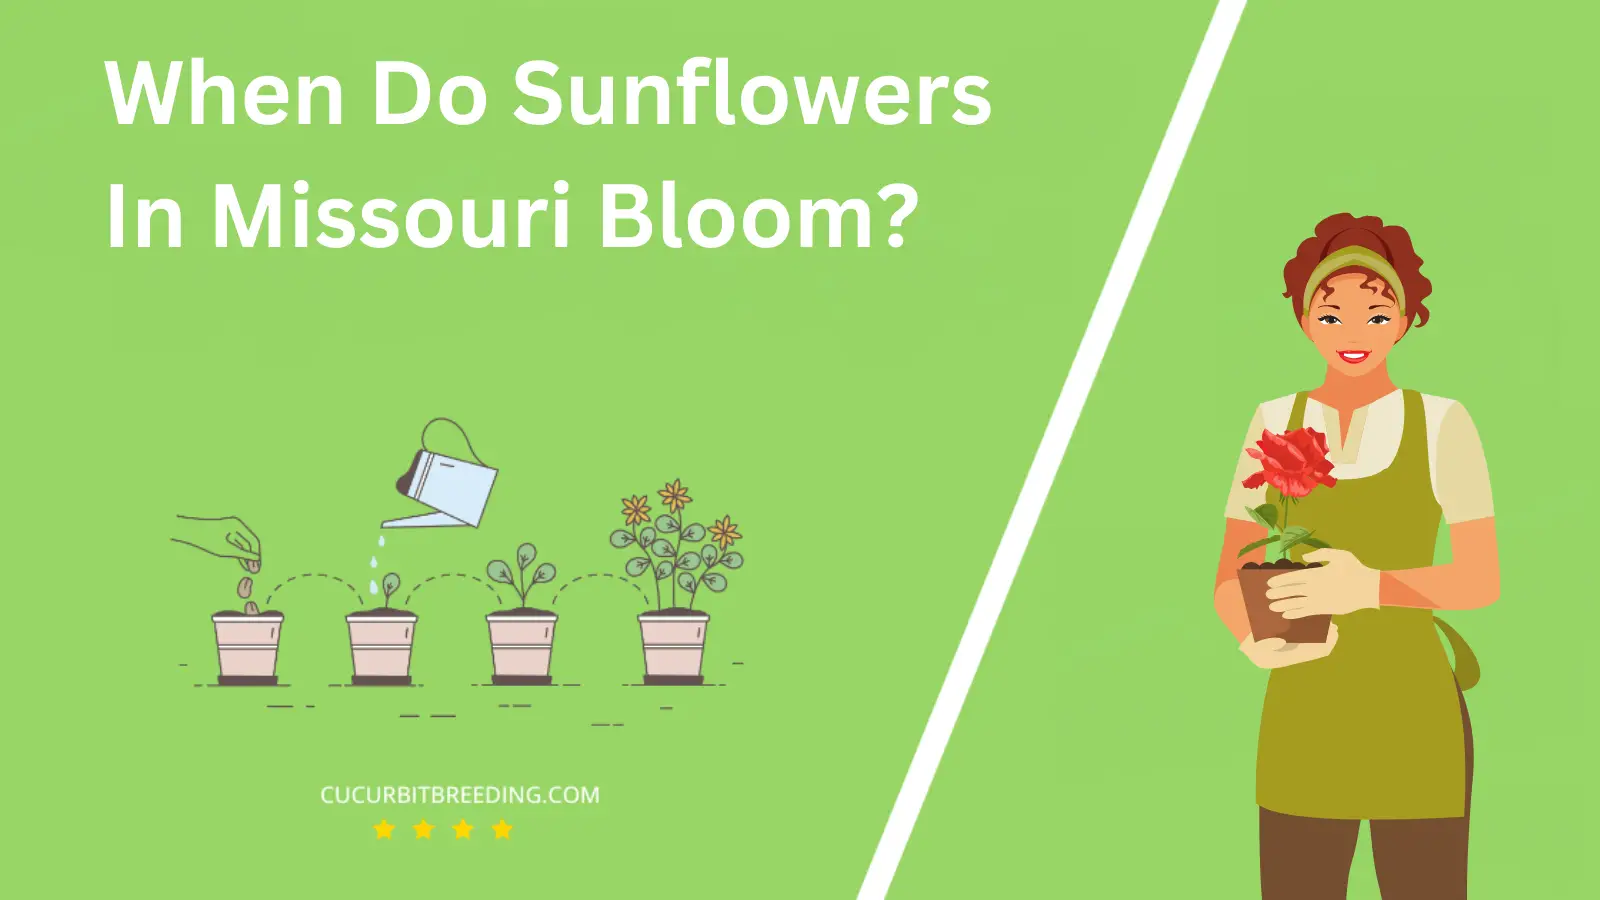 When Do Sunflowers In Missouri Bloom?